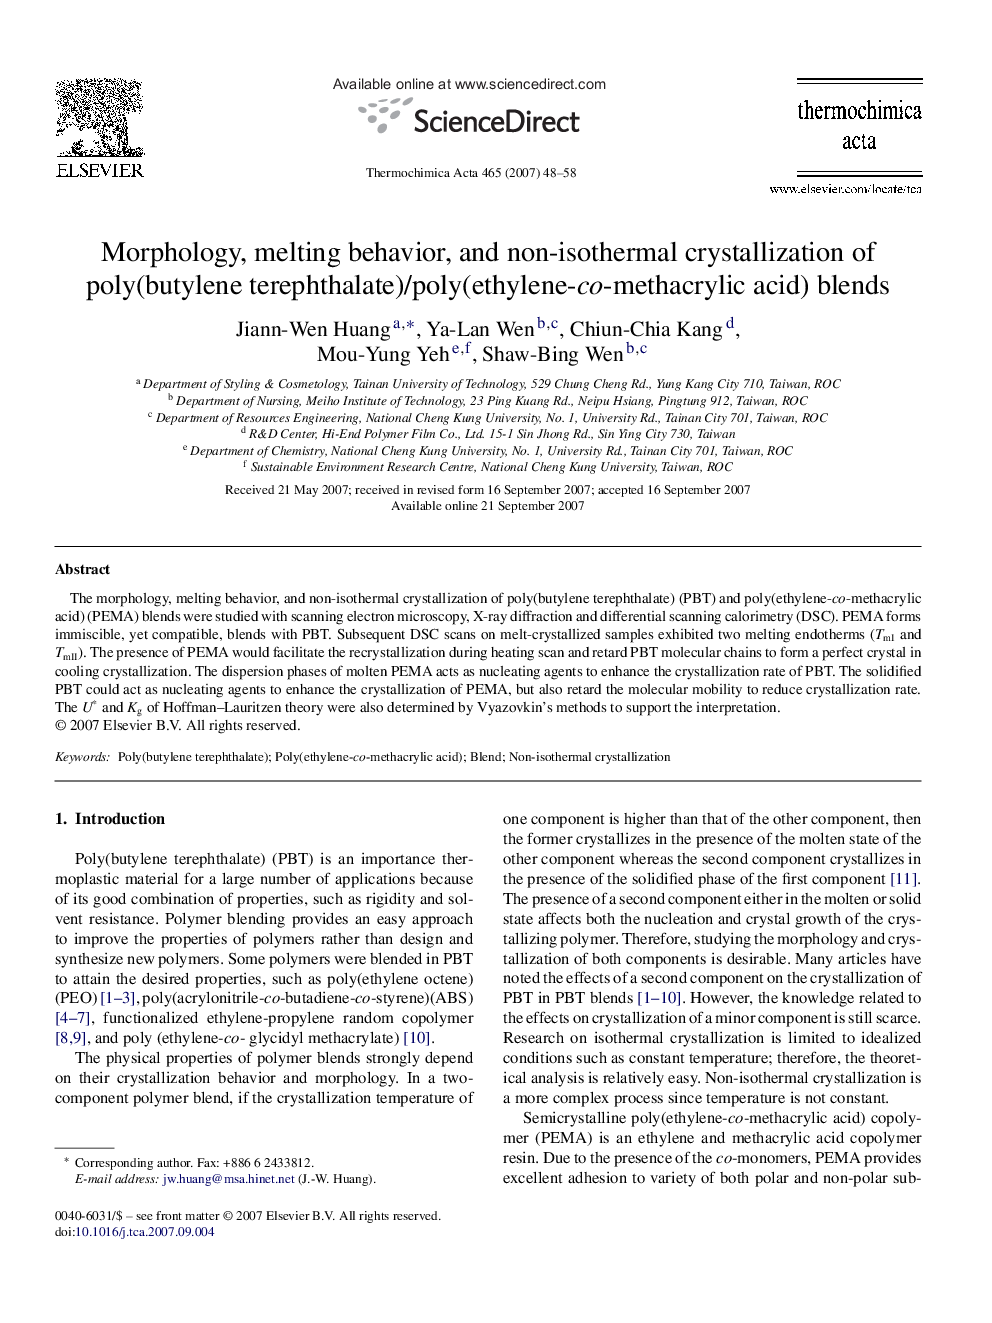 Morphology, melting behavior, and non-isothermal crystallization of poly(butylene terephthalate)/poly(ethylene-co-methacrylic acid) blends